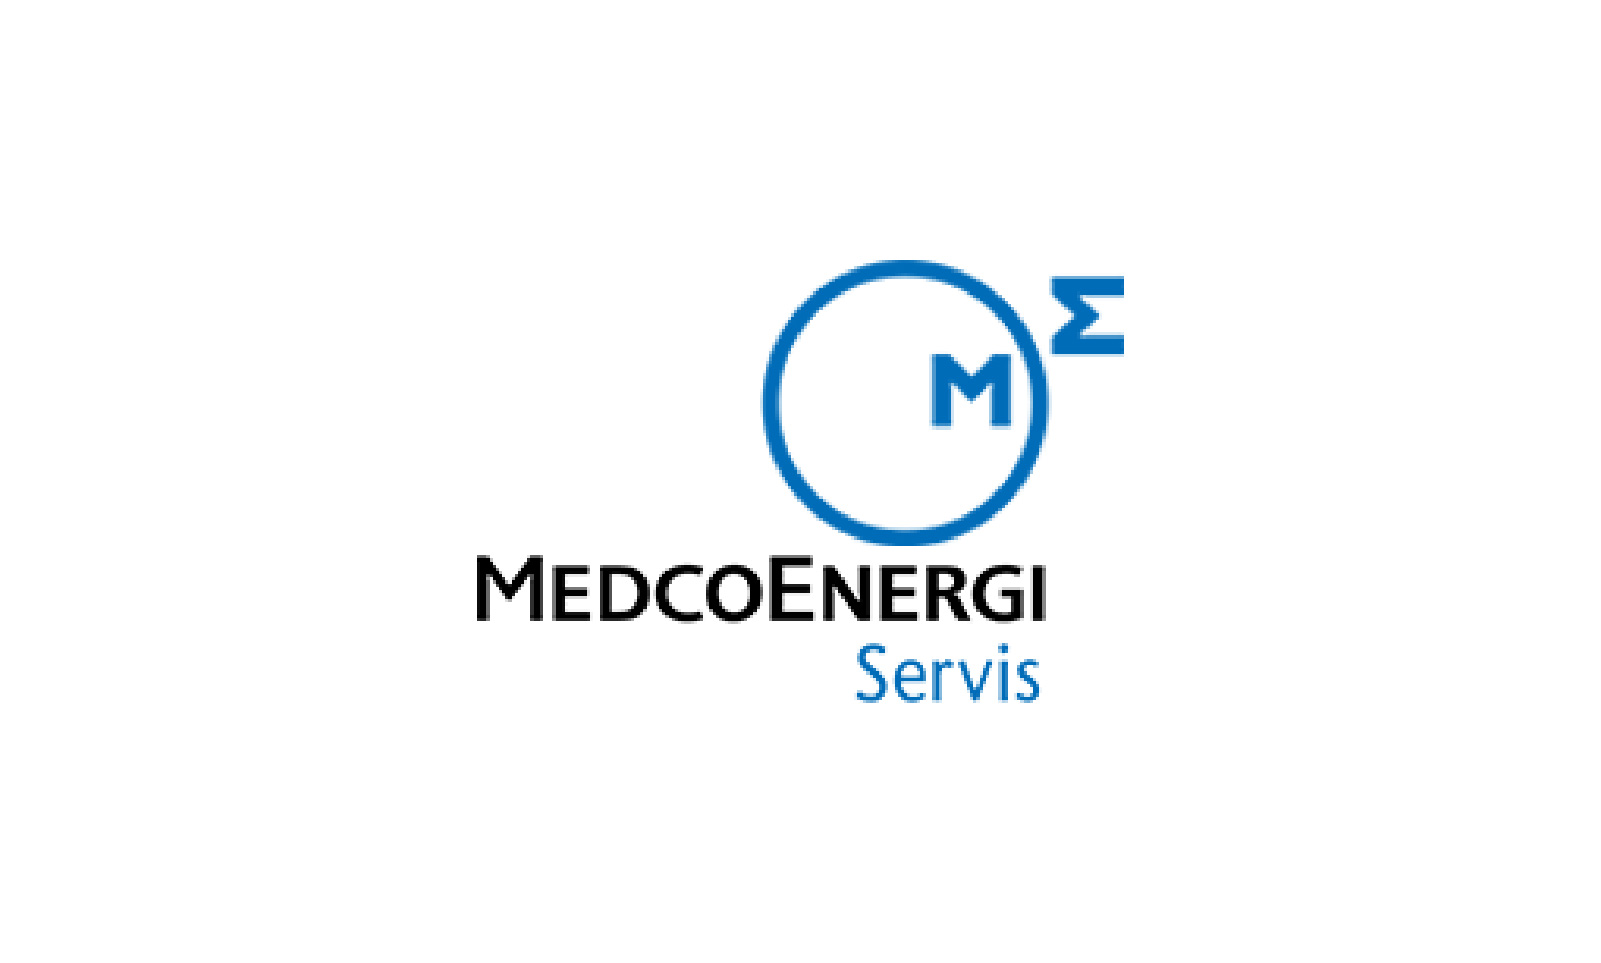 PT Medcopower Servis Indonesia (“MPSI”)